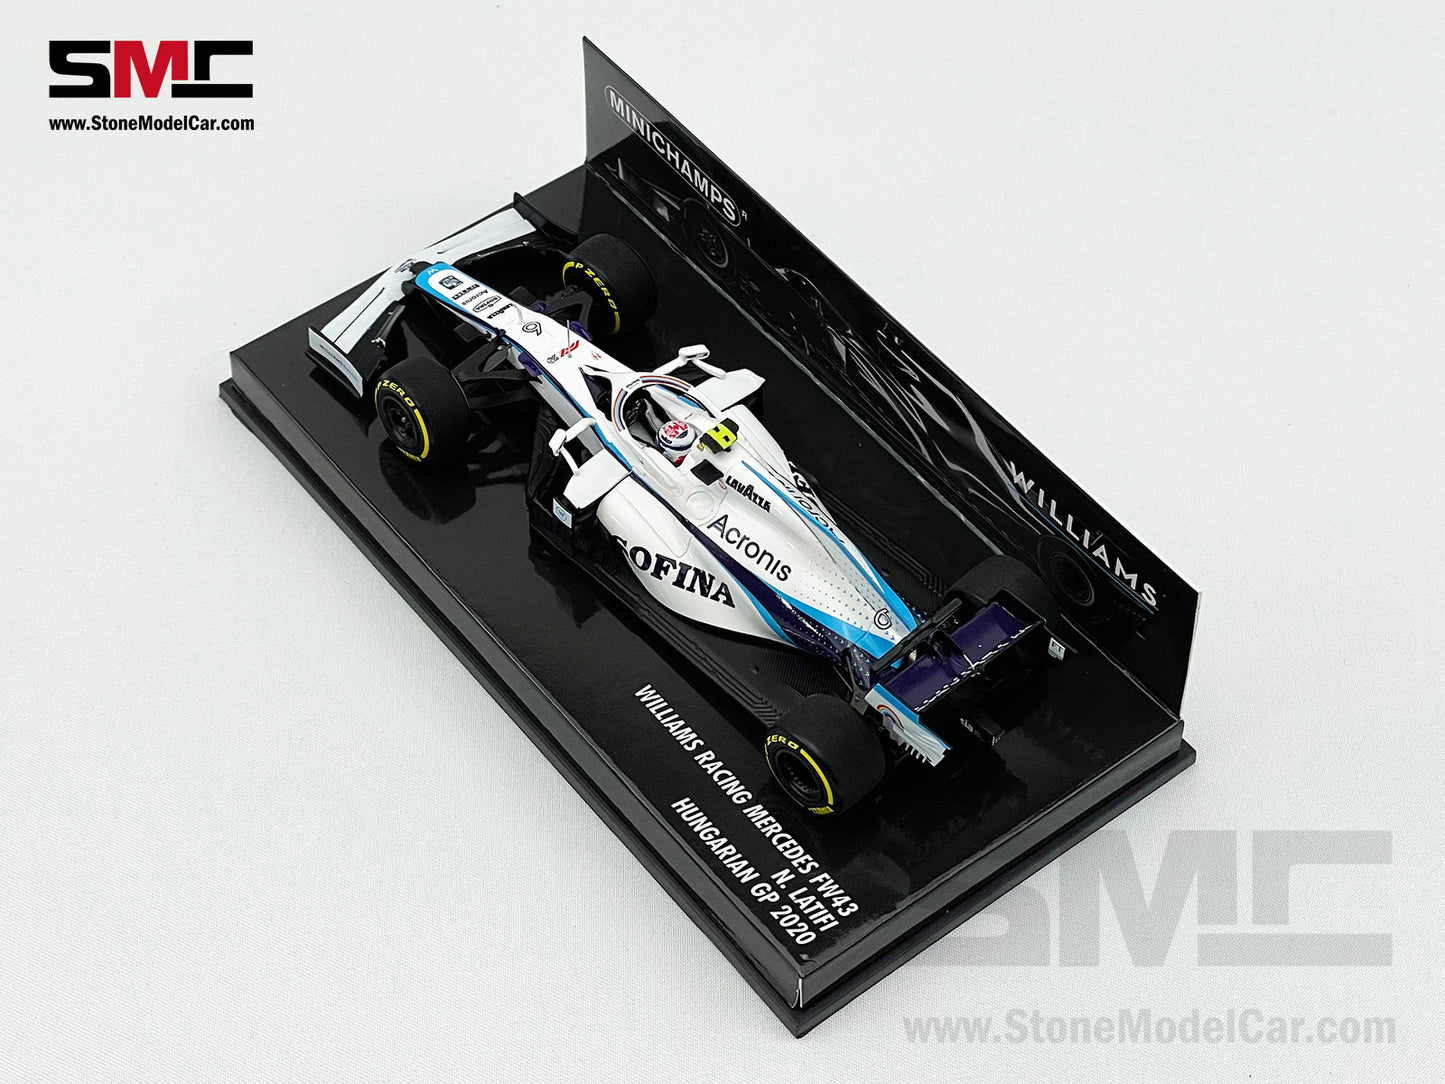 Williams F1 FW43 #6 Nicholas Latifi Hungary GP 2020 1:43 MINICHAMPS 417200106